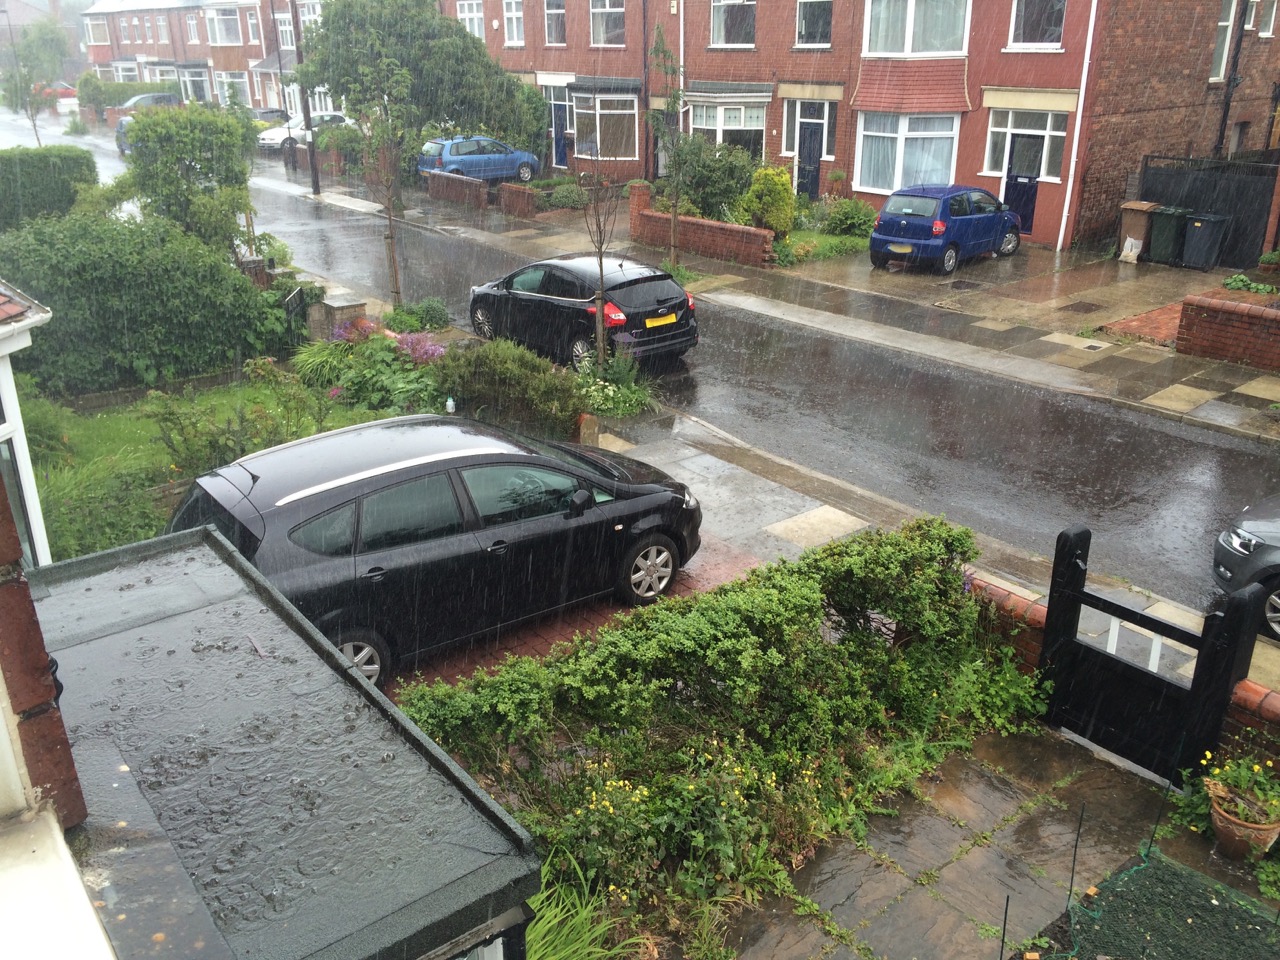 Summer rainfall in Newcastle (photo credits: L. McGinty)